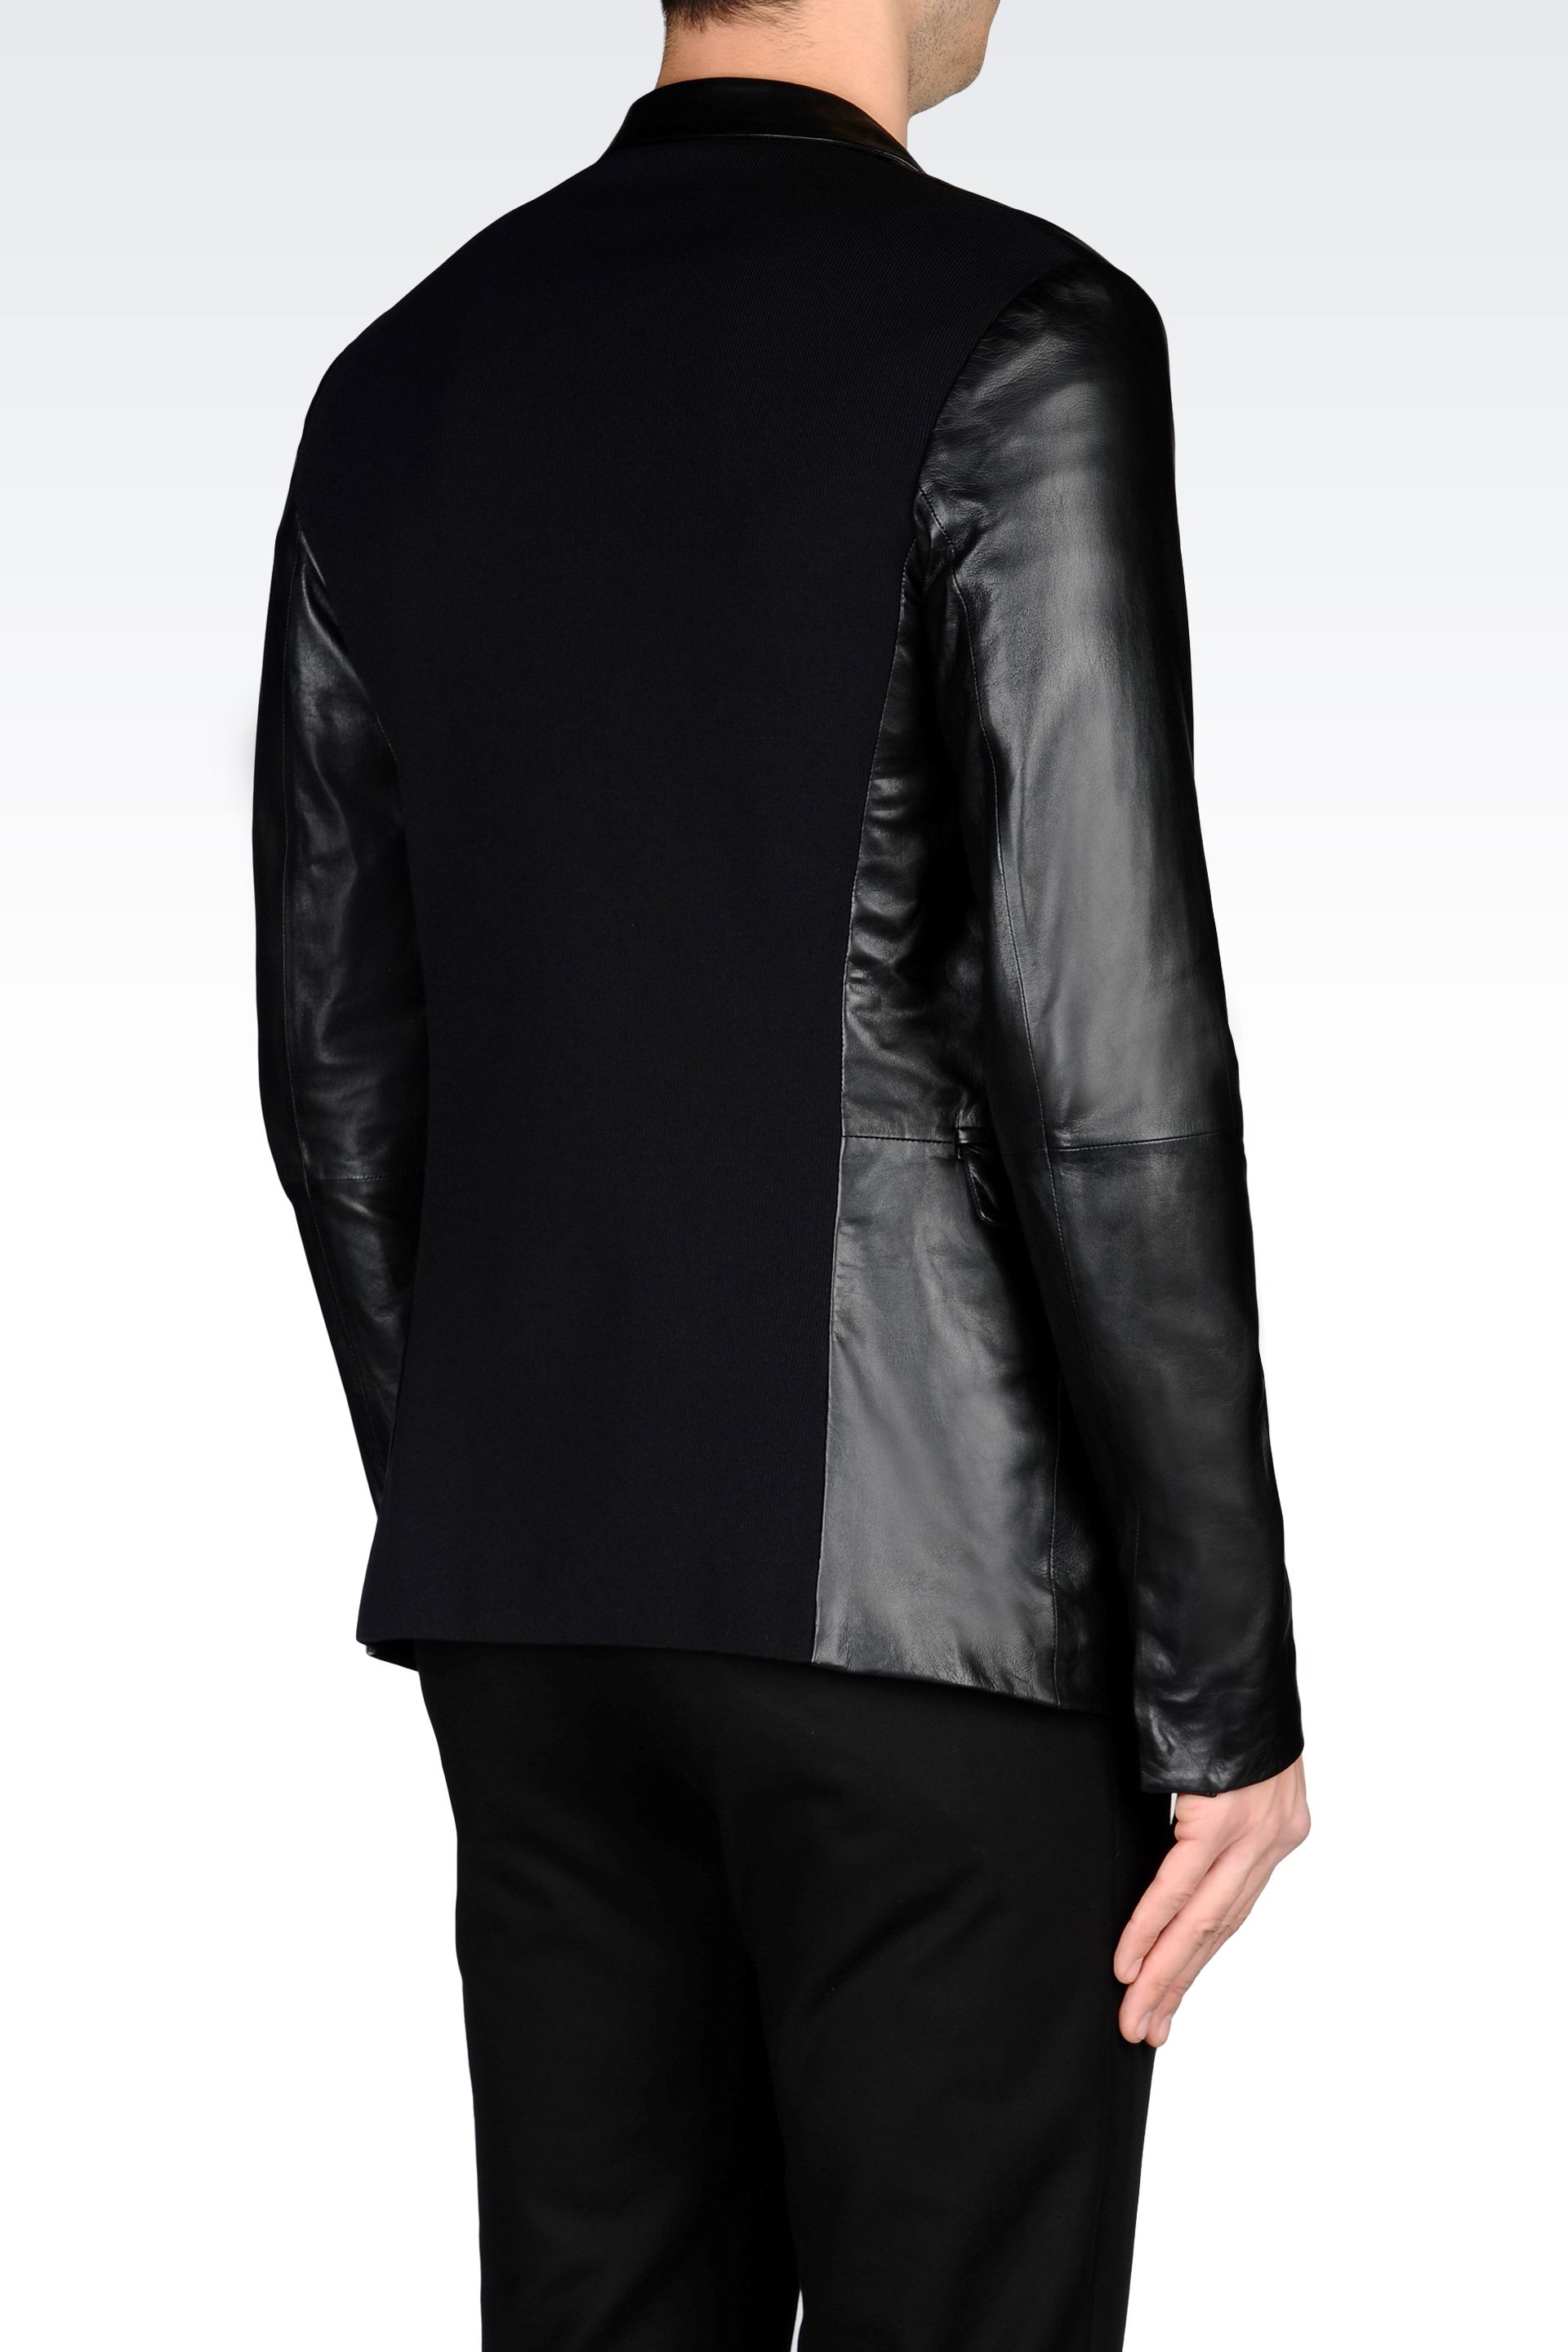 Emporio Armani Jacket In Napa Lambskin in Black for Men - Lyst